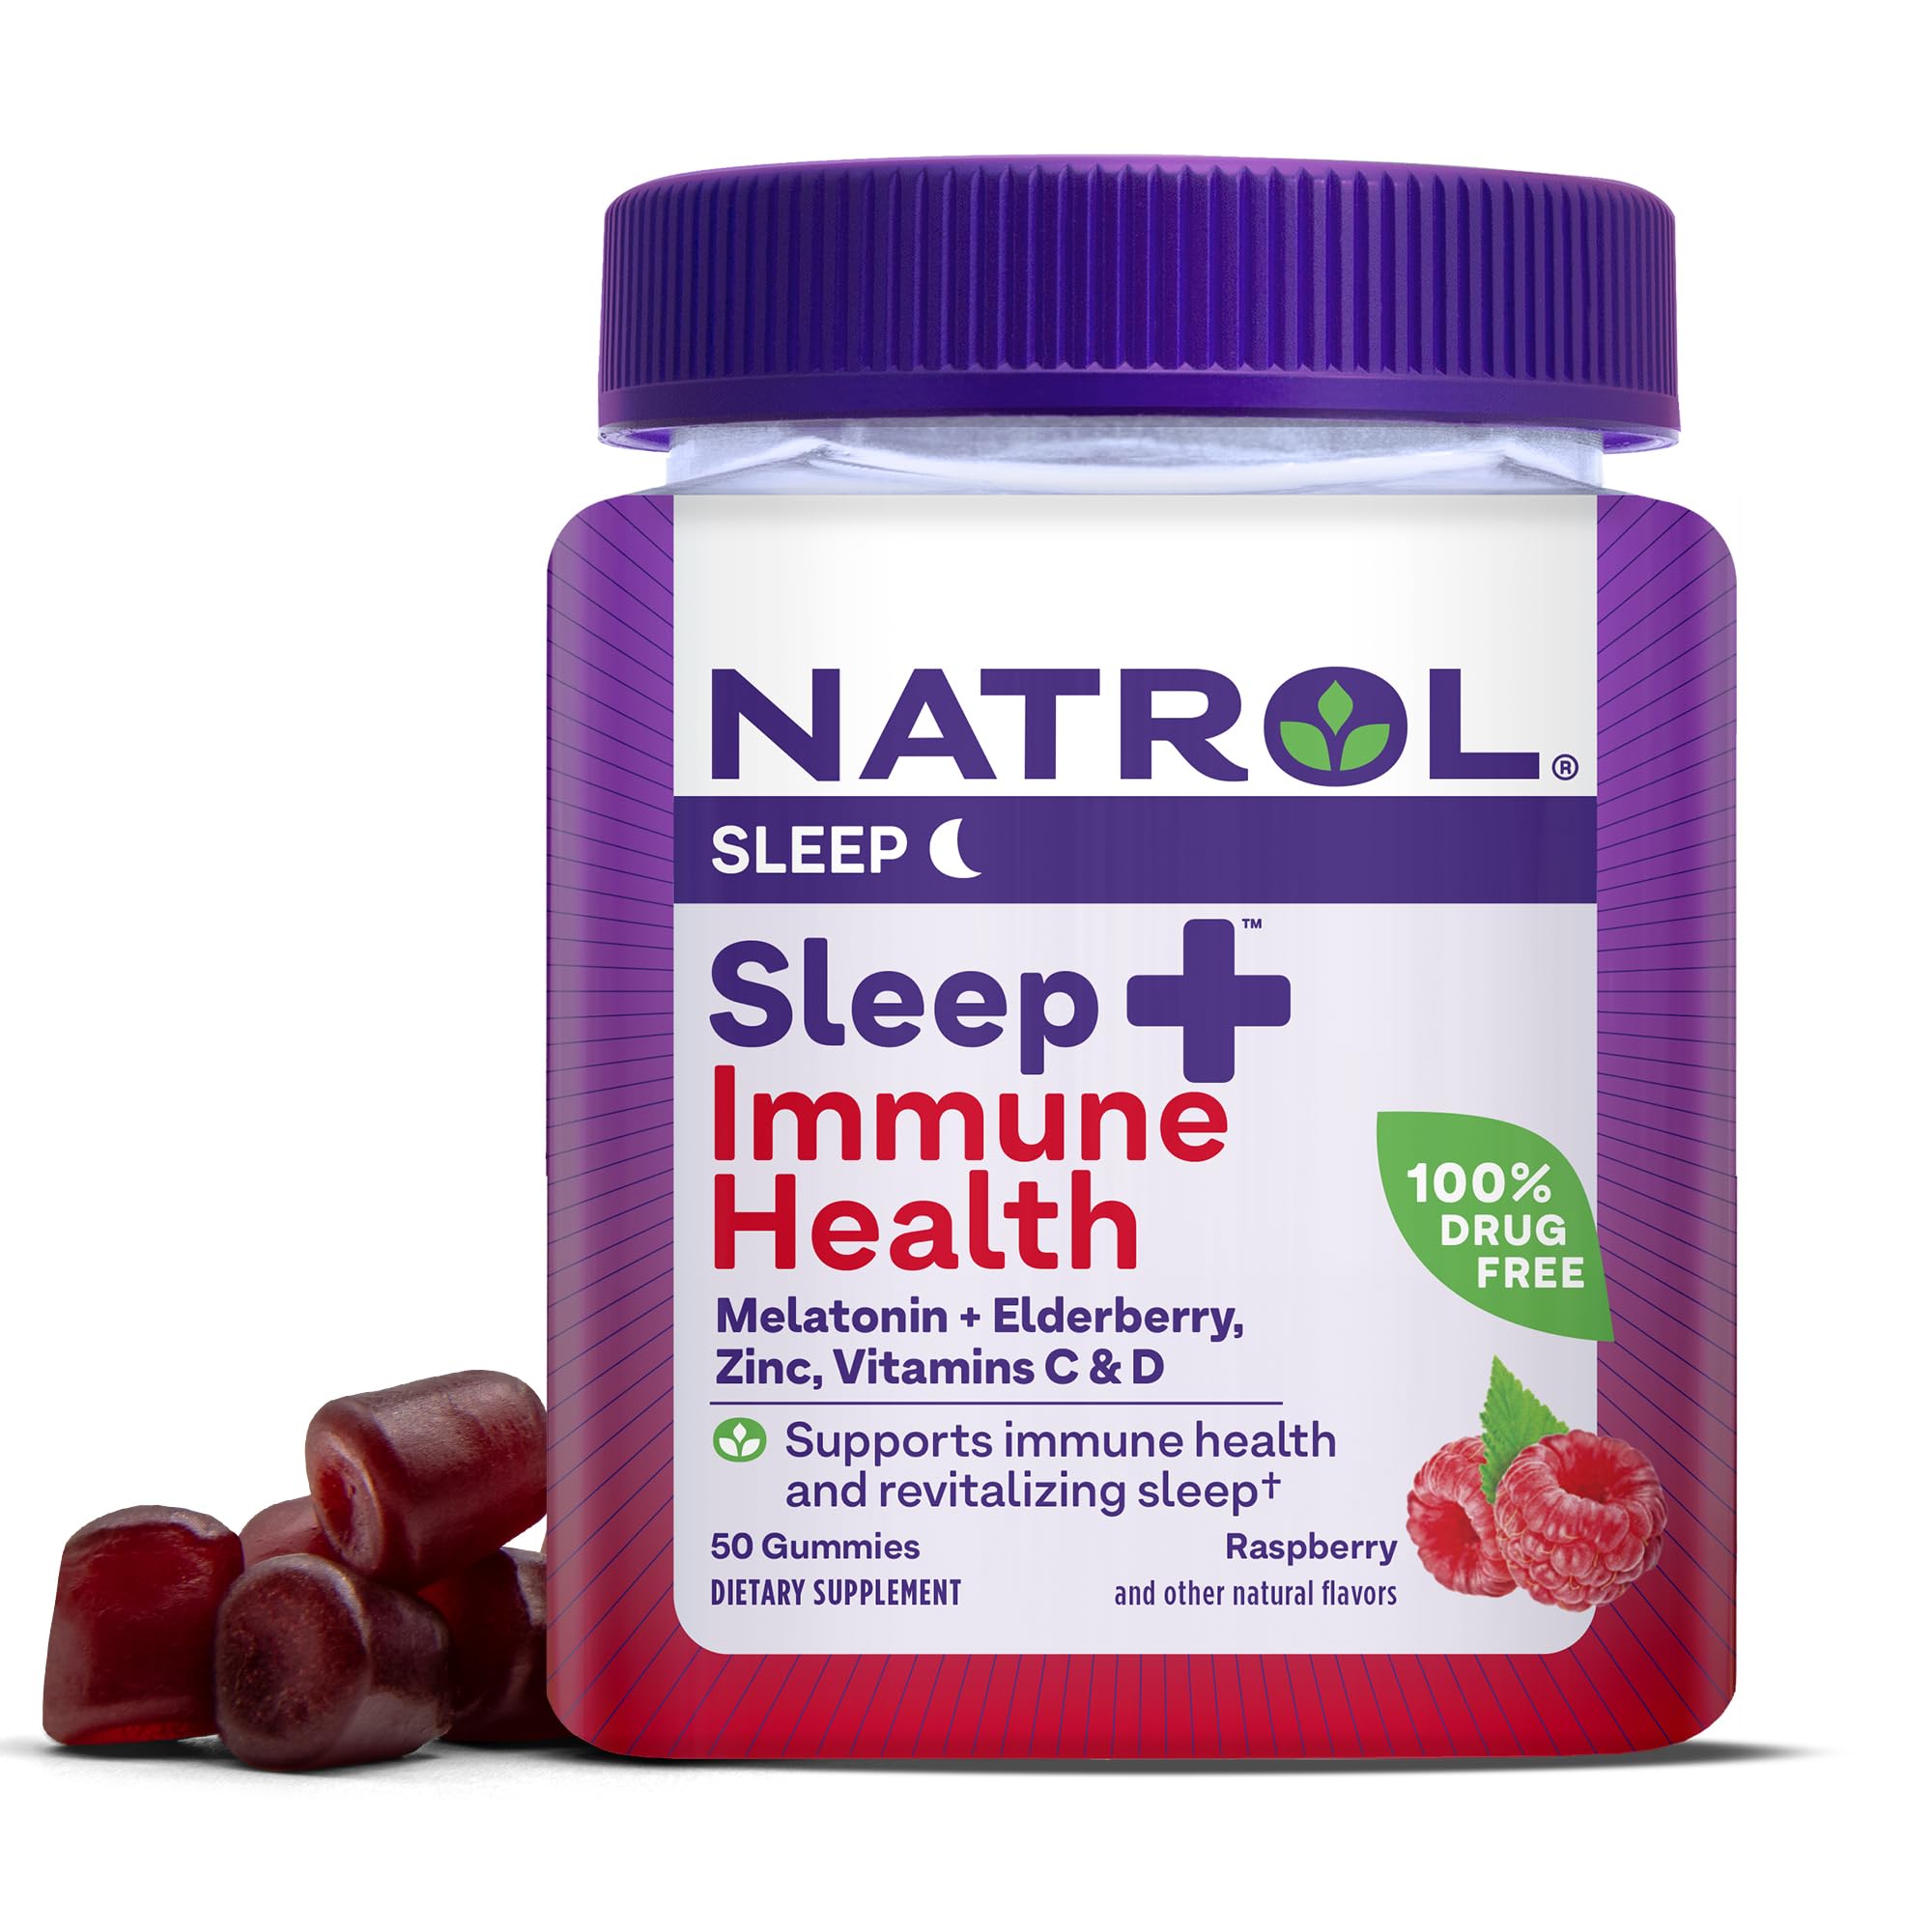 Natrol Sleep Immune Health Gummy, Sleep Aid Immunity Support, Elderberry, Vitamins C, D and Zinc, Drug Free, 50 Berry Flavored Gummies